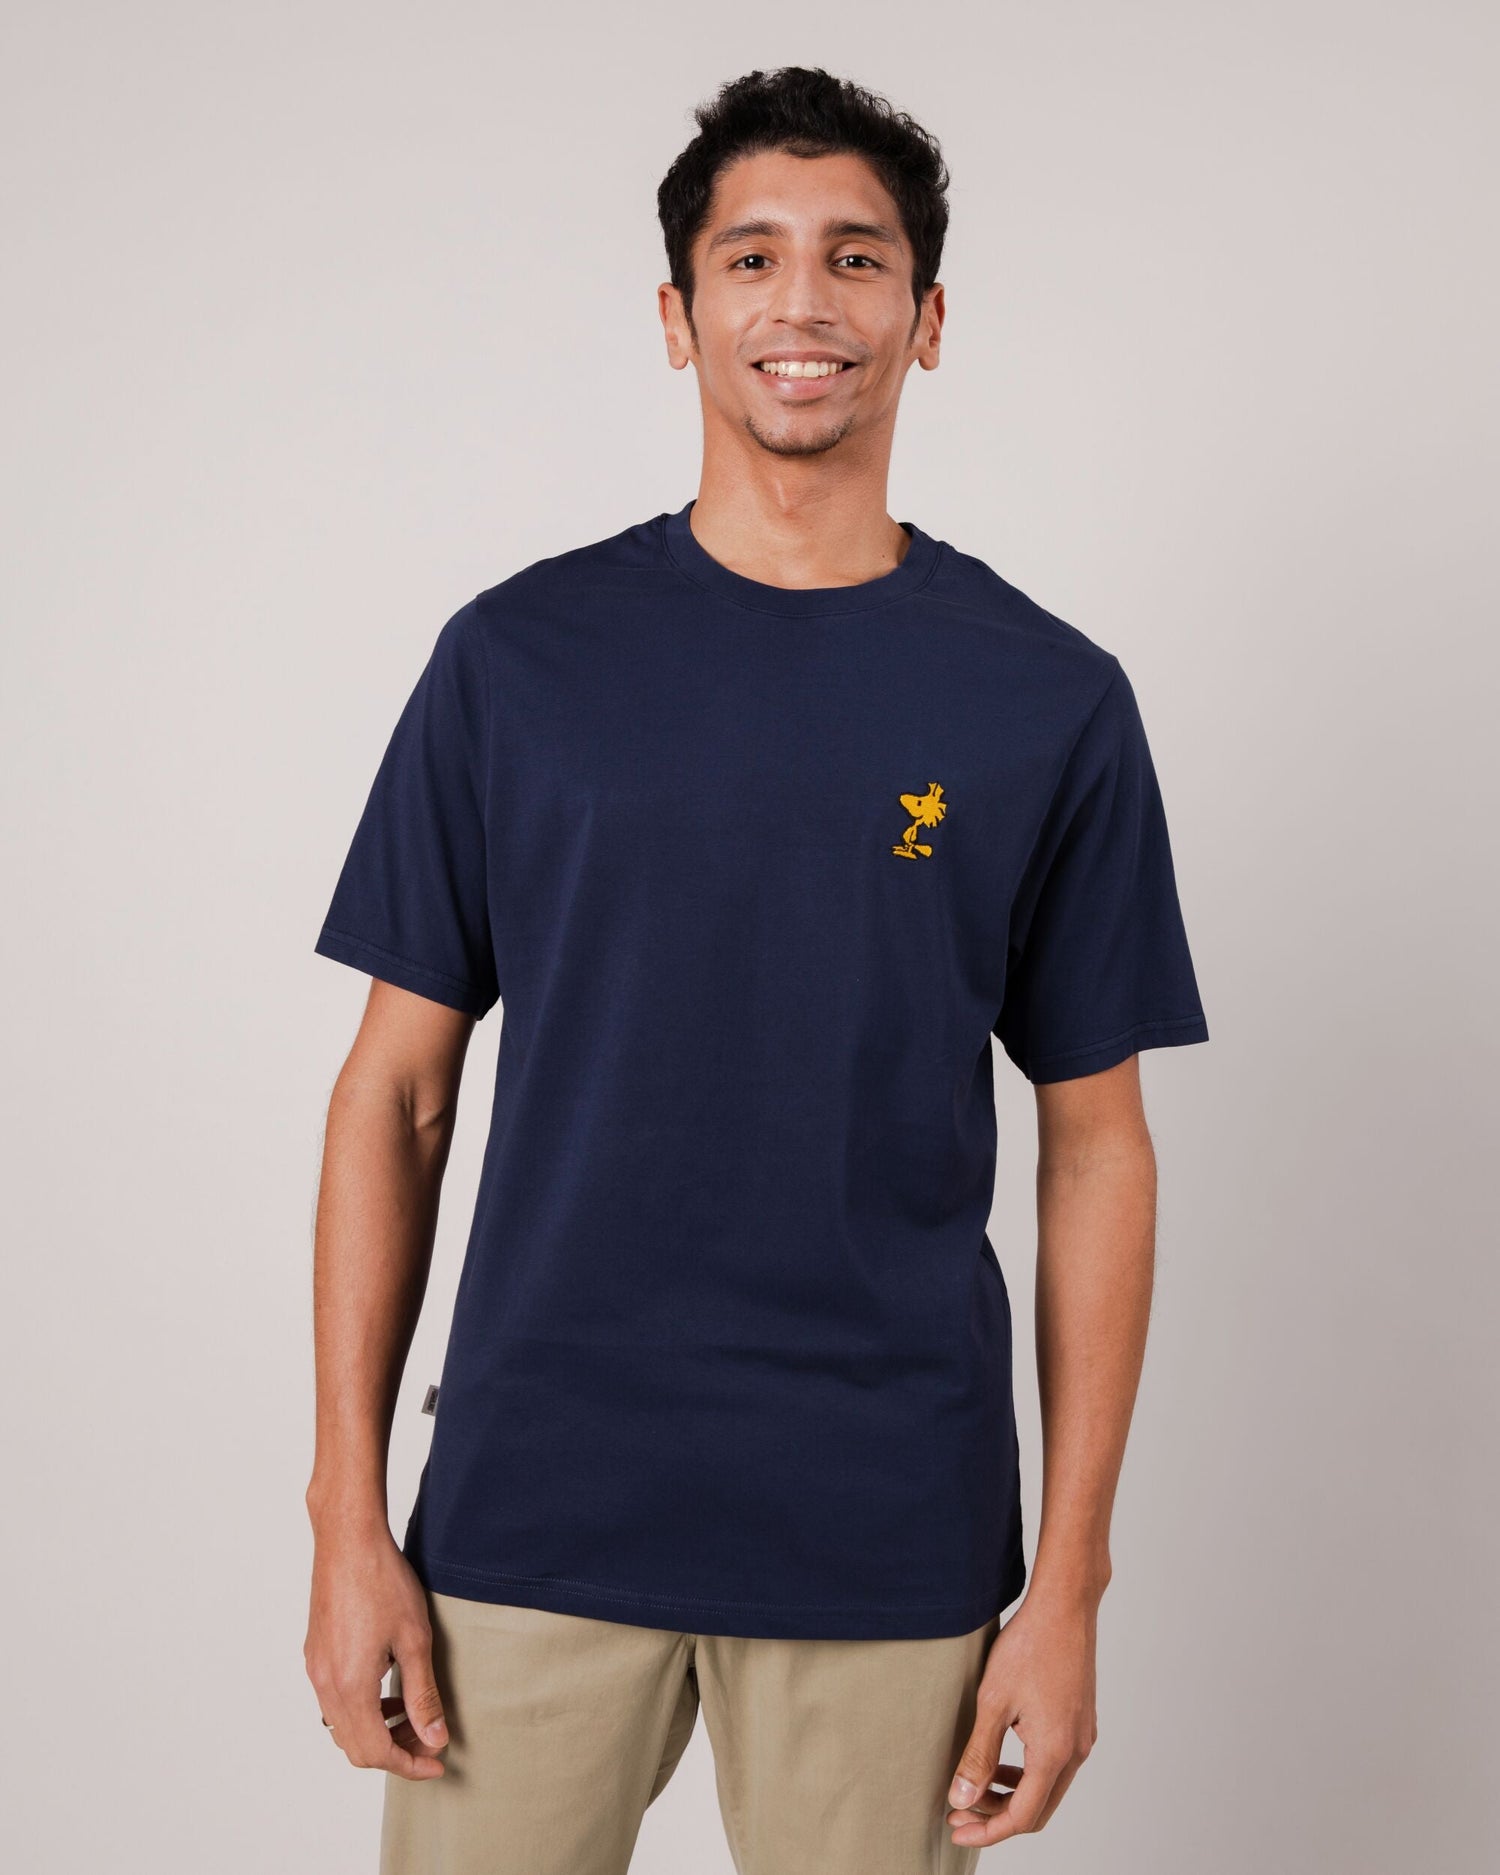 Peanuts Woodstock T-Shirt Navy